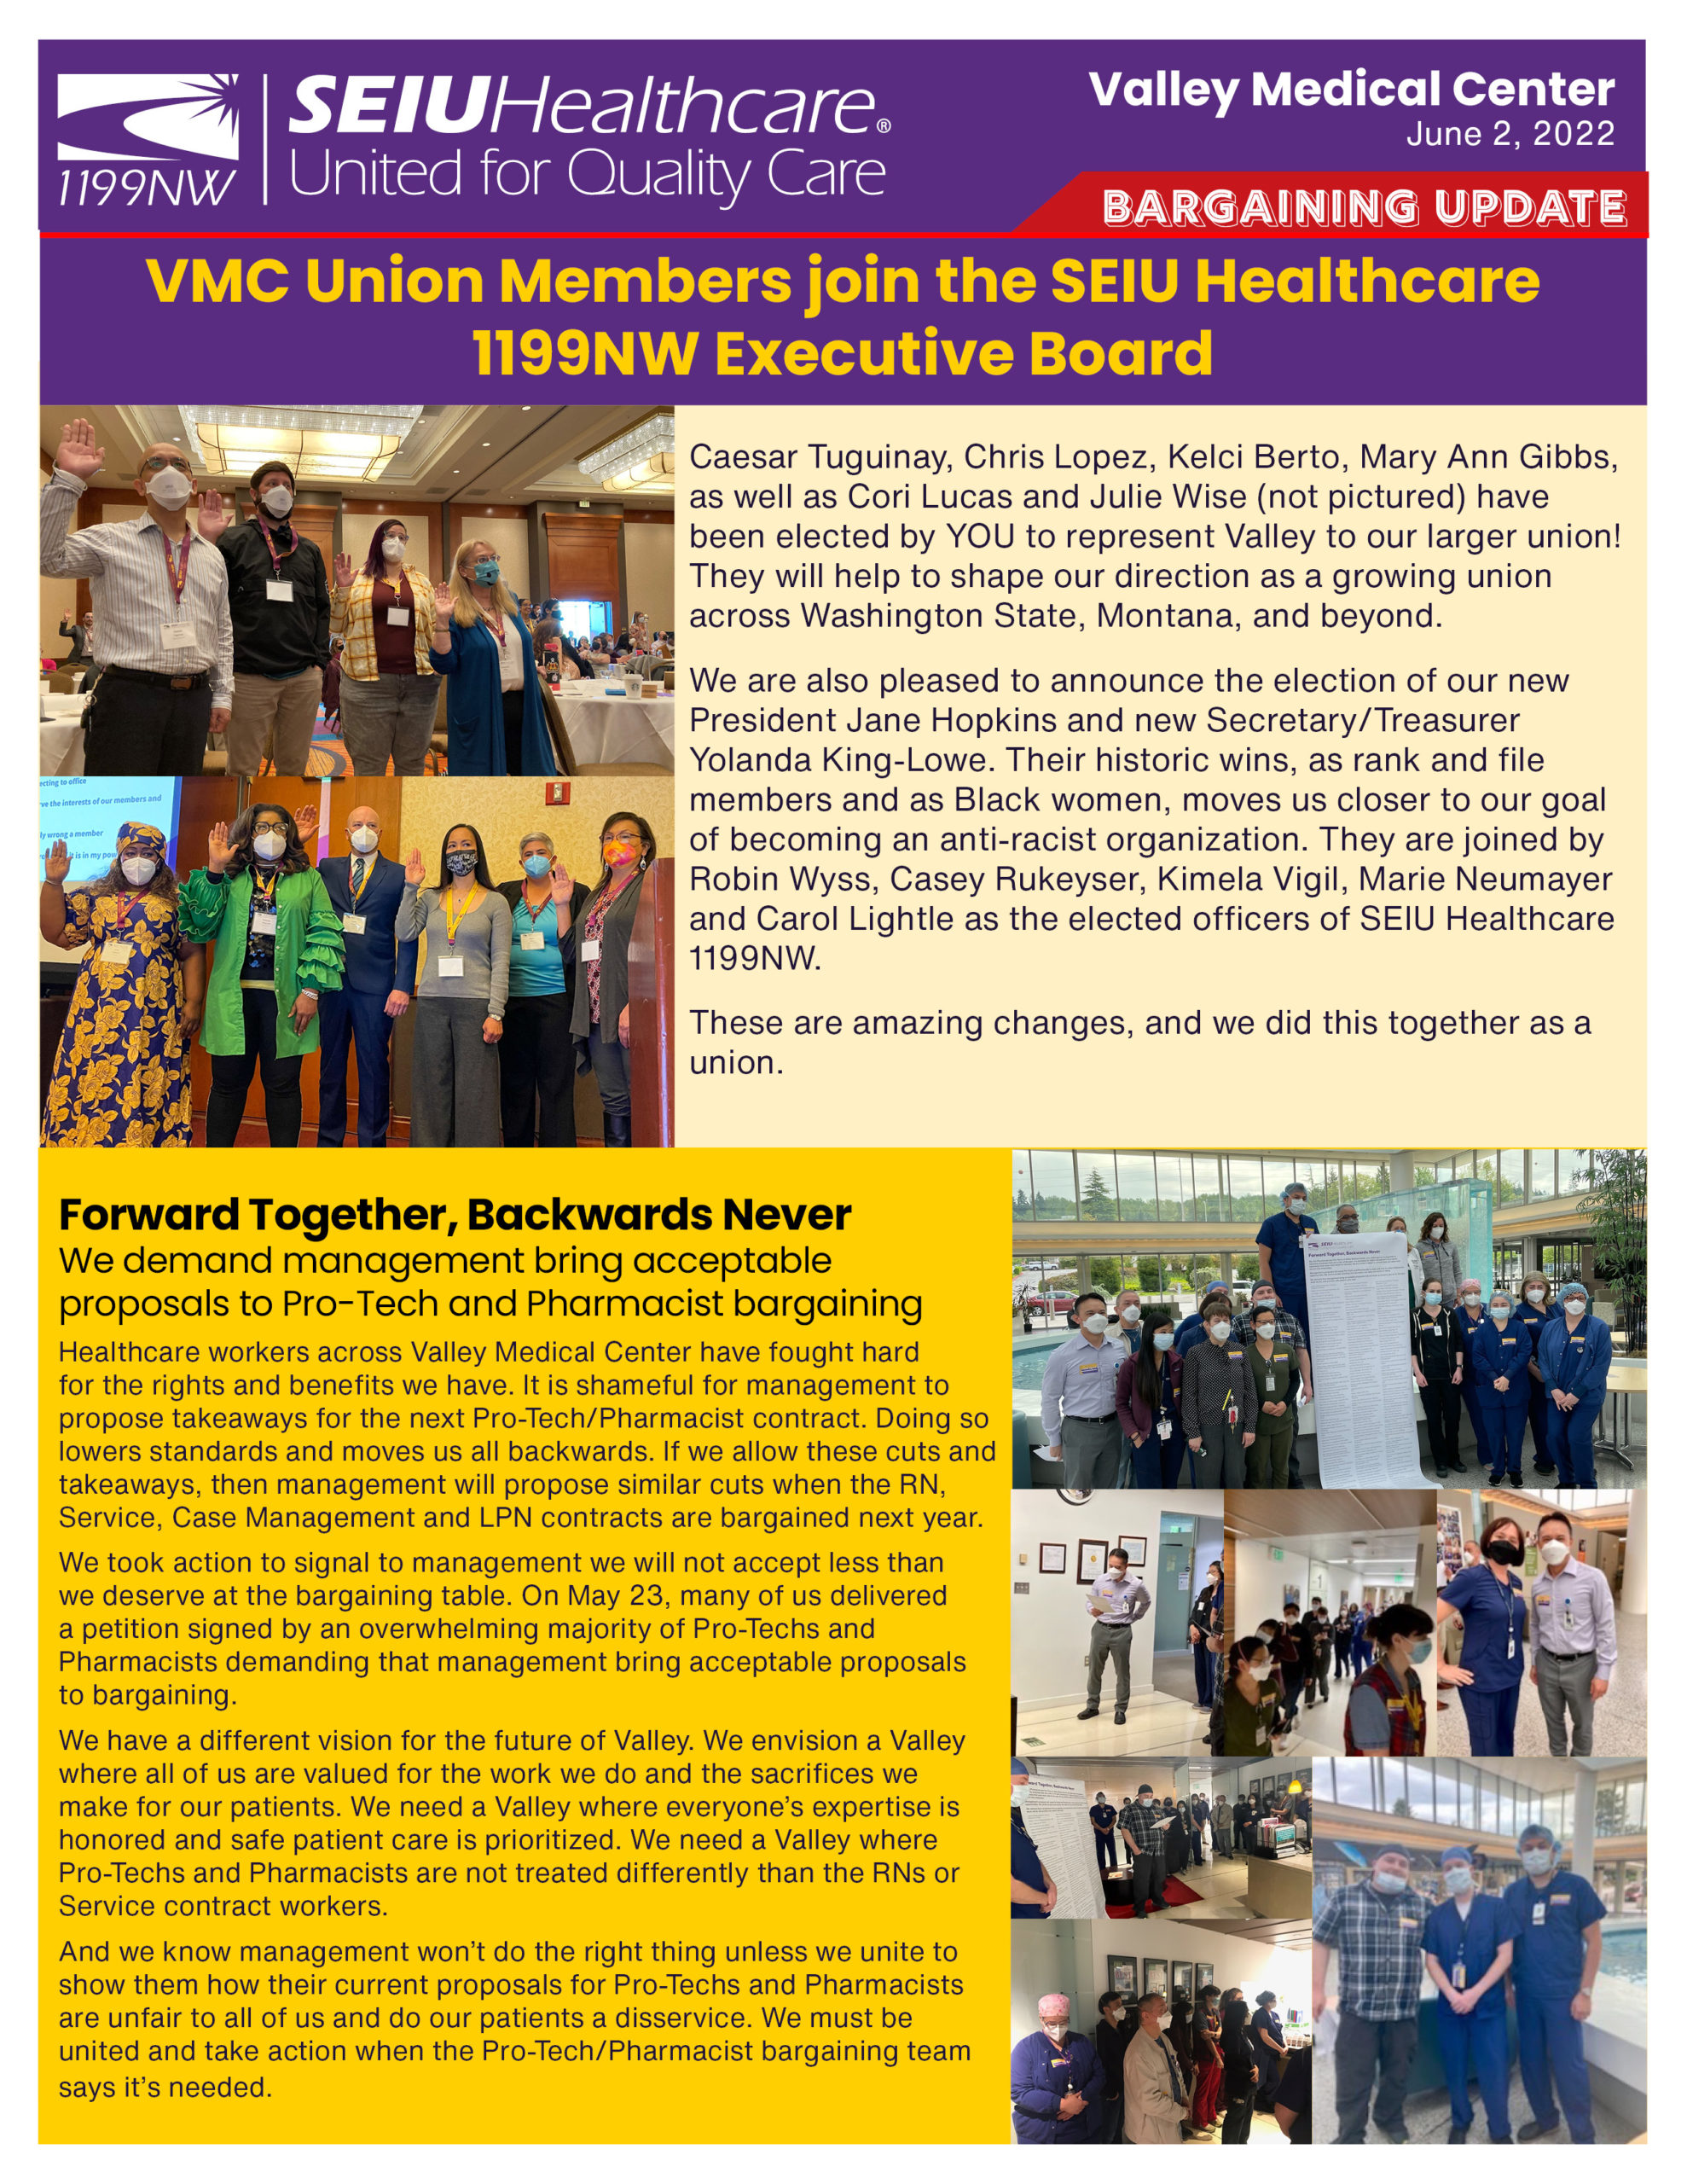 VMC Union Members join the SEIU Healthcare 1199NW Executive Board